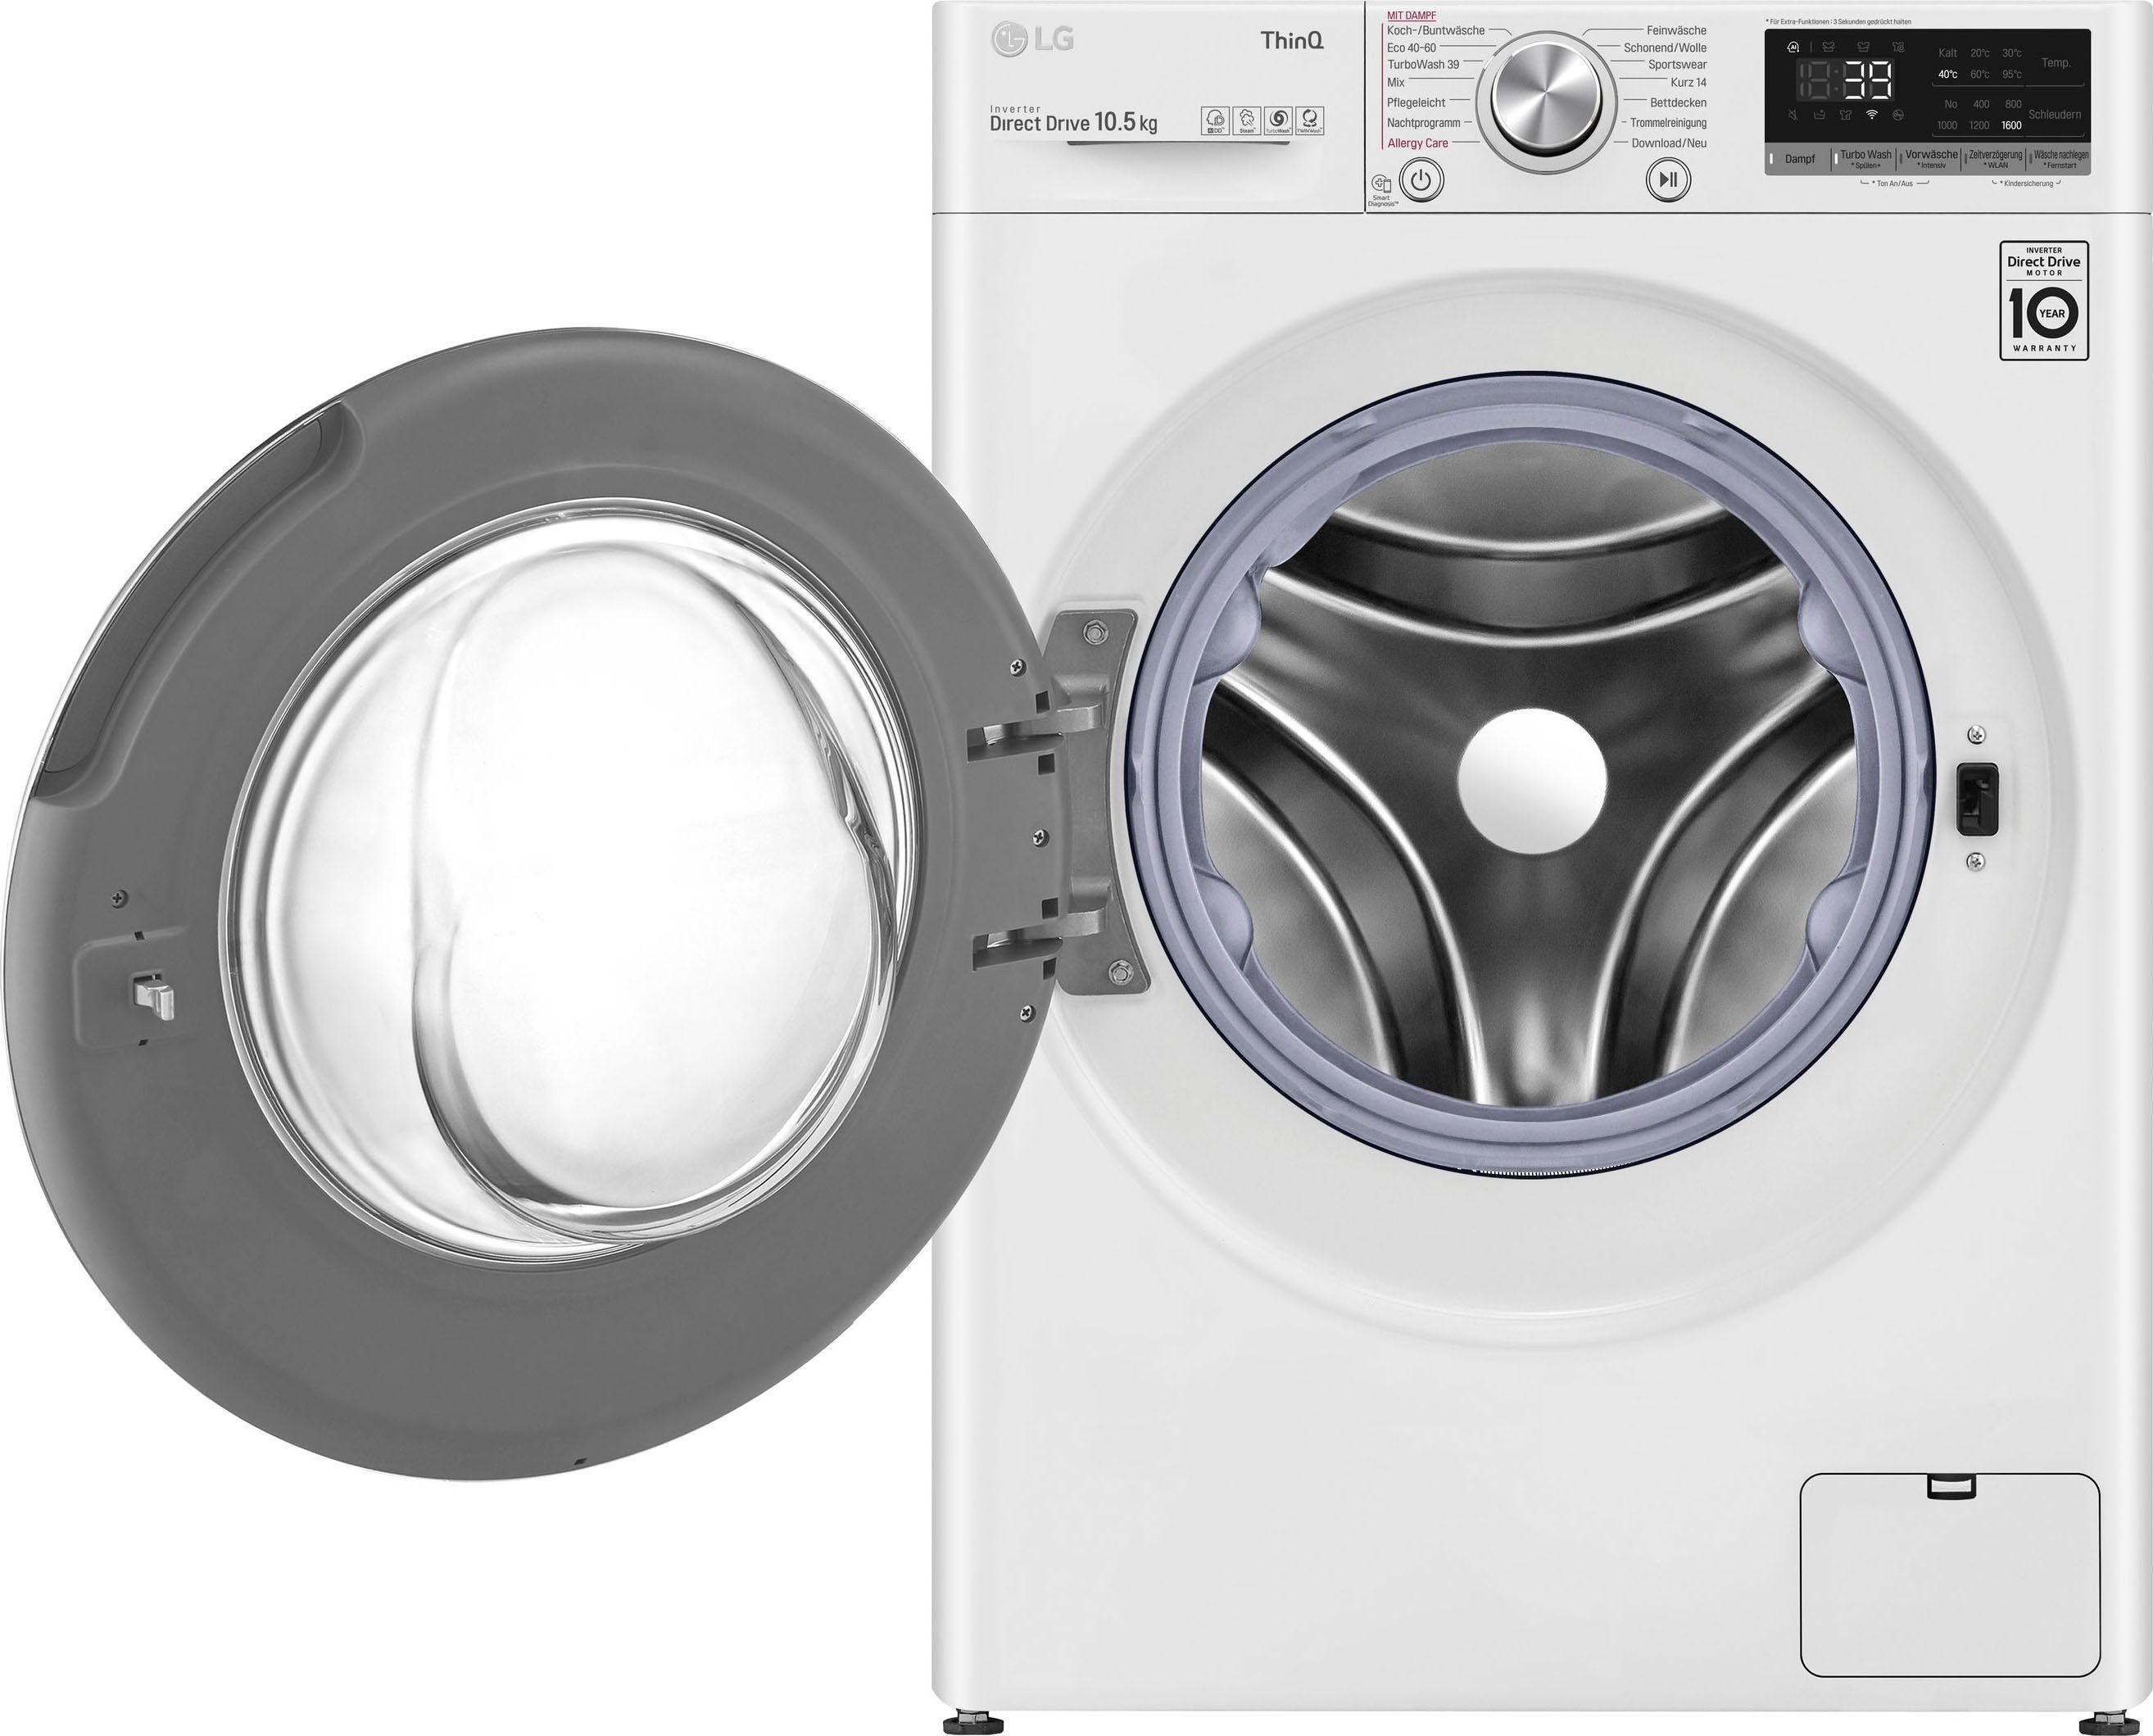 LG Waschmaschine 1400 U/min, Steam-Funktion kg, F4WV5080, 8